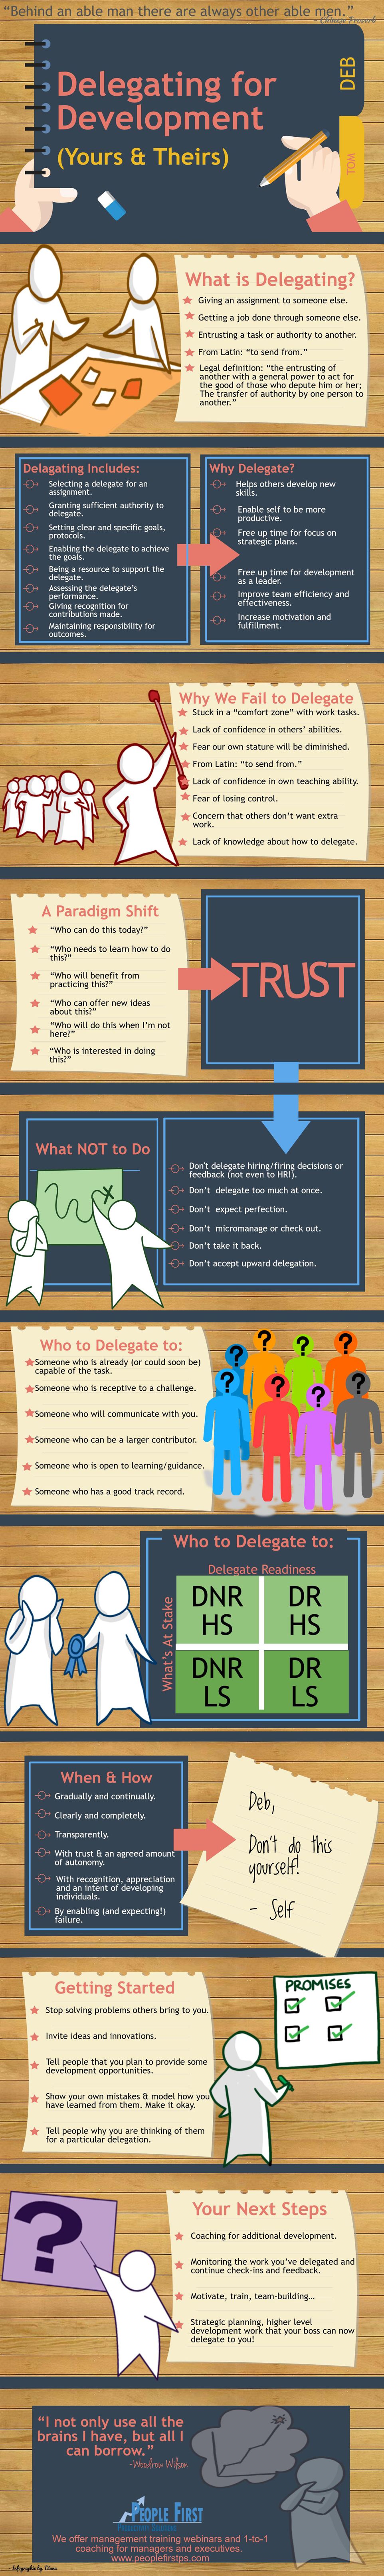 infographic on delegating for development